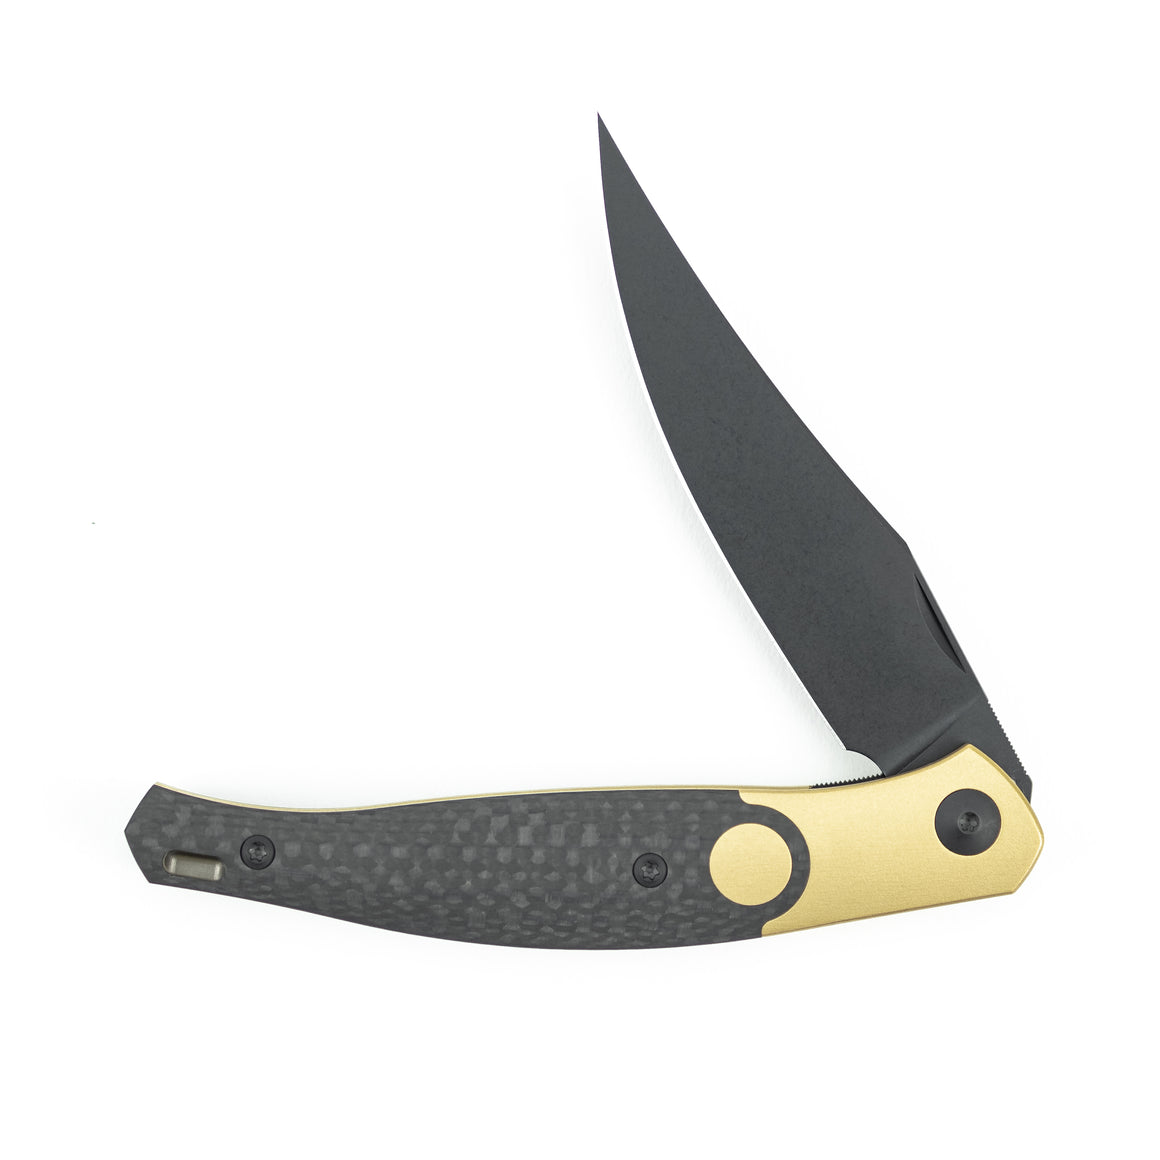 GiantMouse GMP7 - Folder Knife - Carbon Fiber Handle